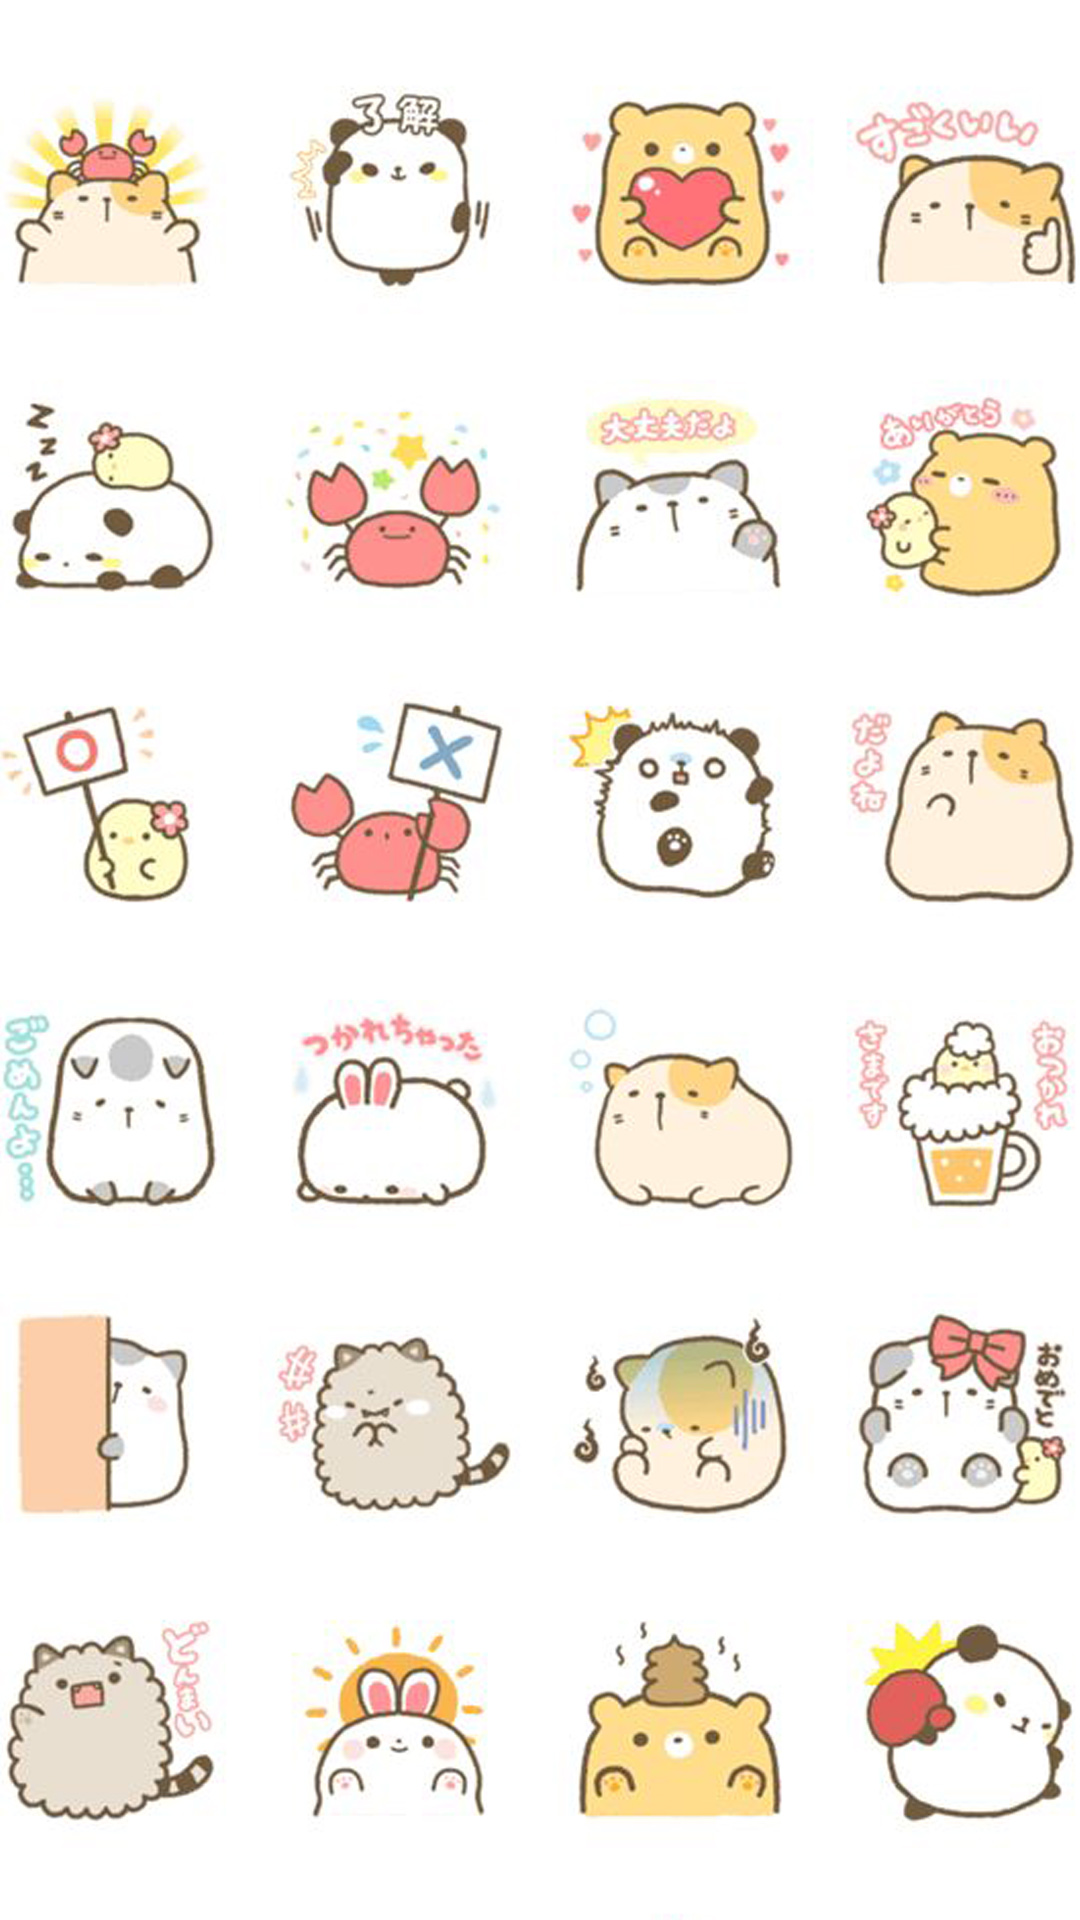 Cute Wallpapers For Iphone 5s - Kawaii Cute Cartoon Animals Drawings -  1080x1920 Wallpaper 